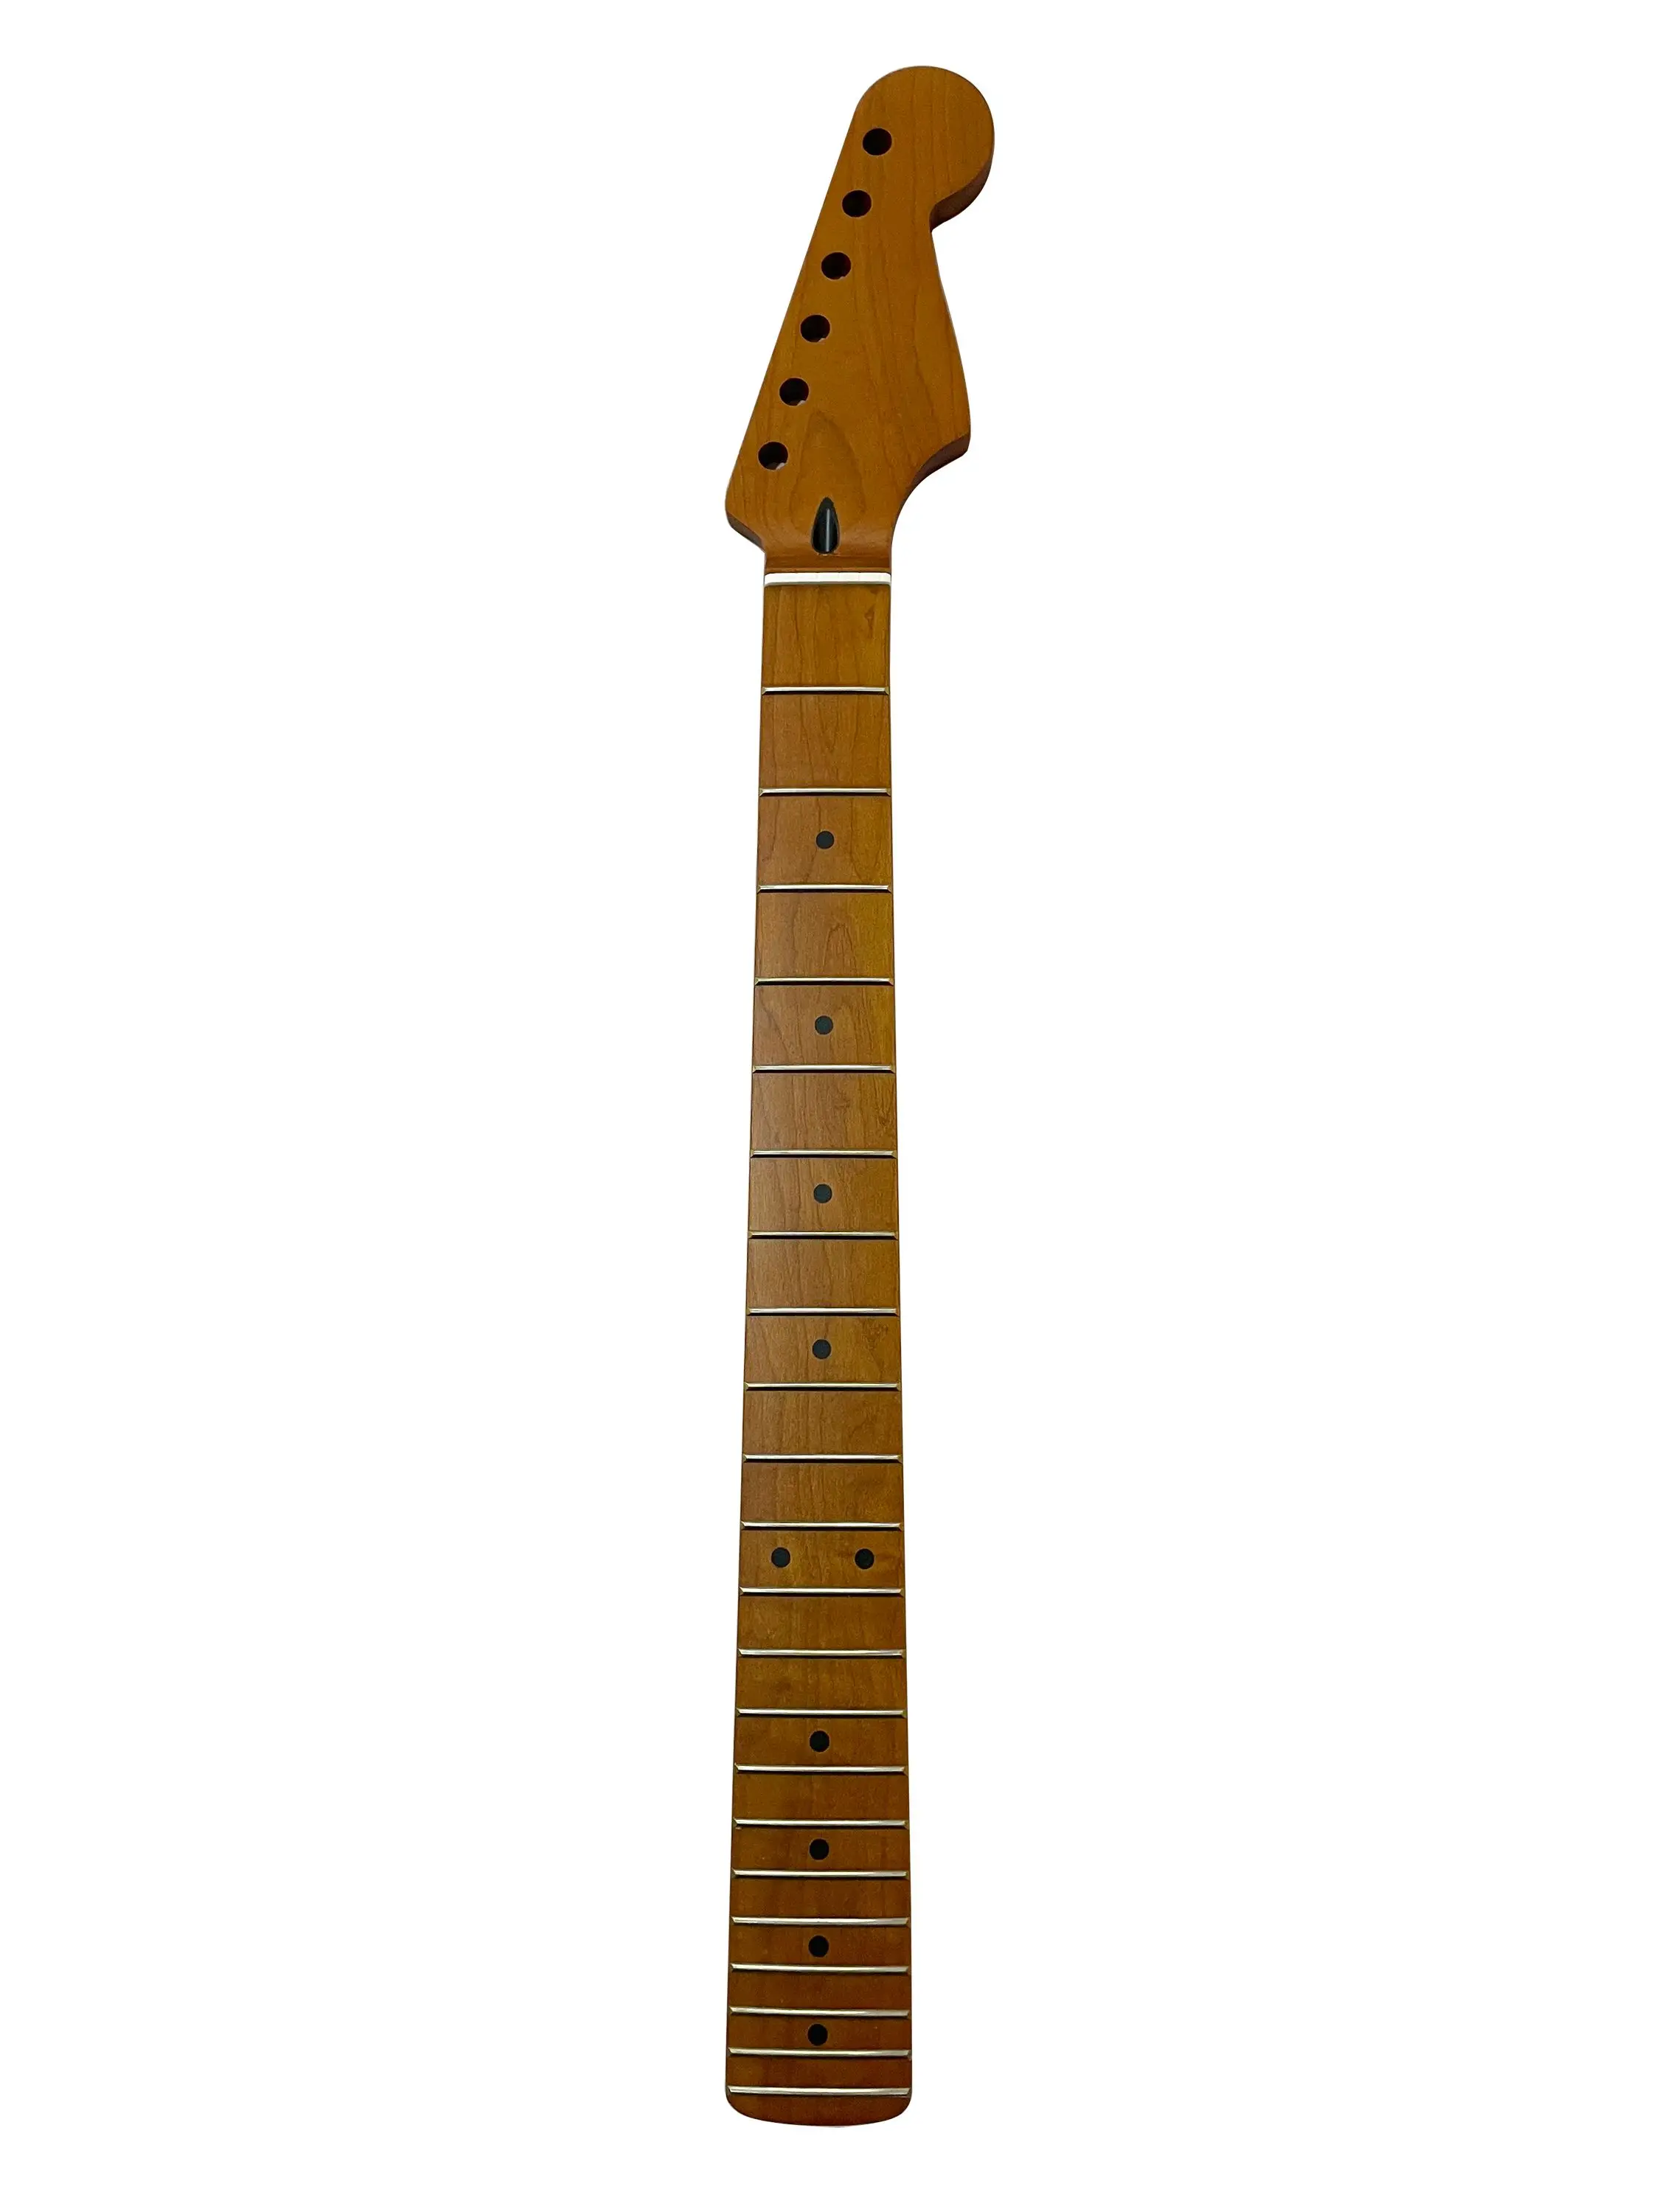 Luthier DIY Brand New Matt 22-piece Baking Plus ST Electric Guitar Neck Roasted Maple Matt Guitarra Neck Replacement Accessories